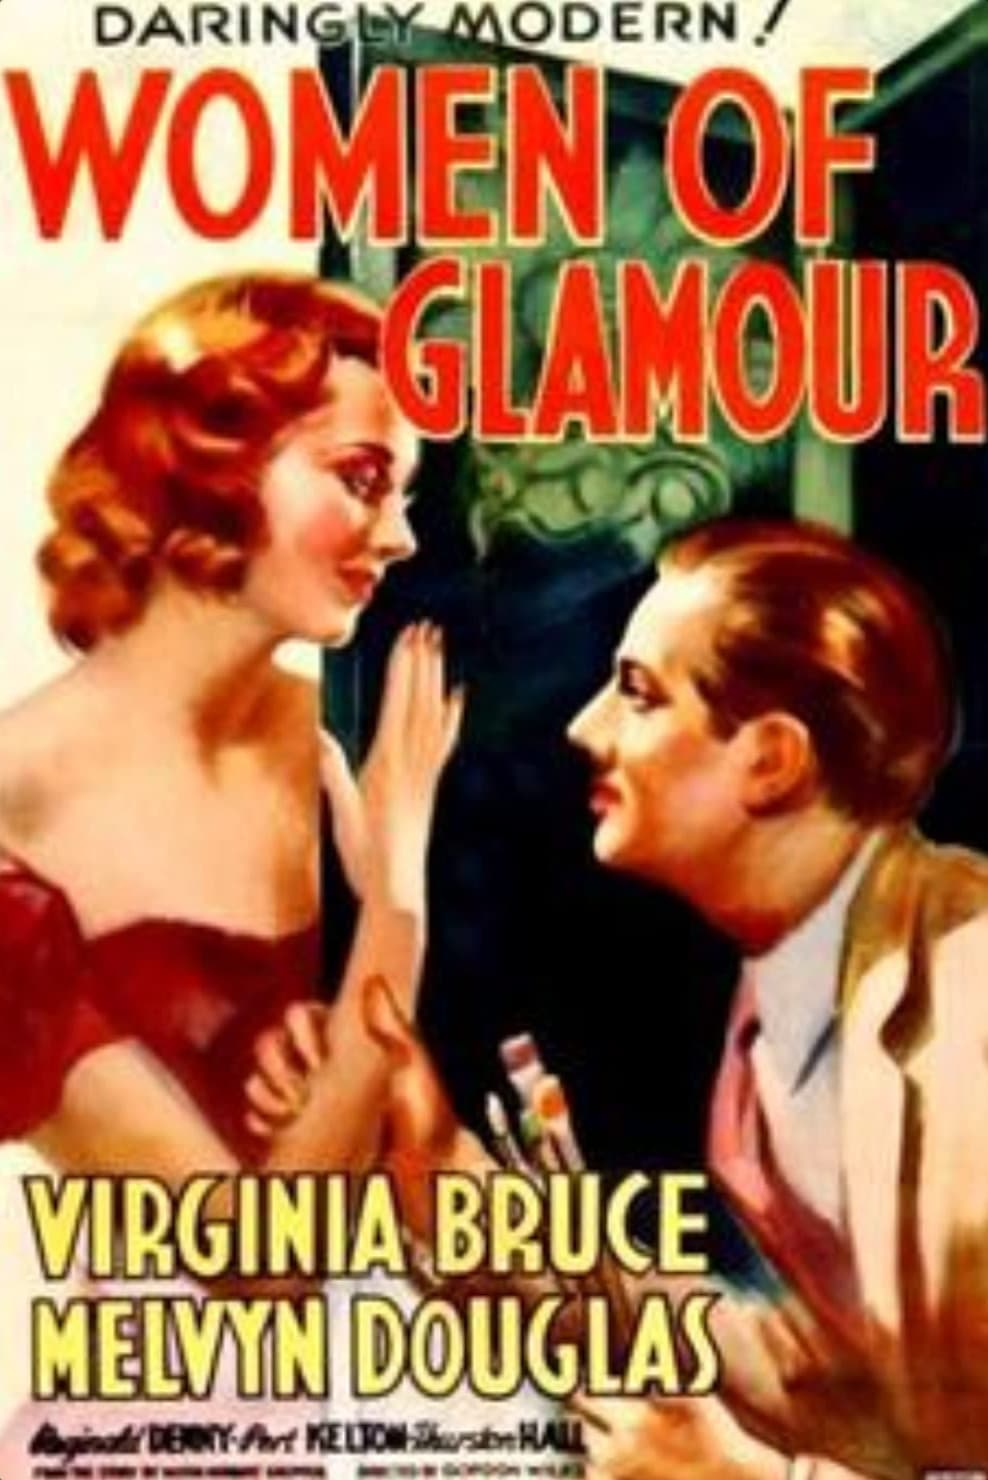 Women of Glamour (1937)